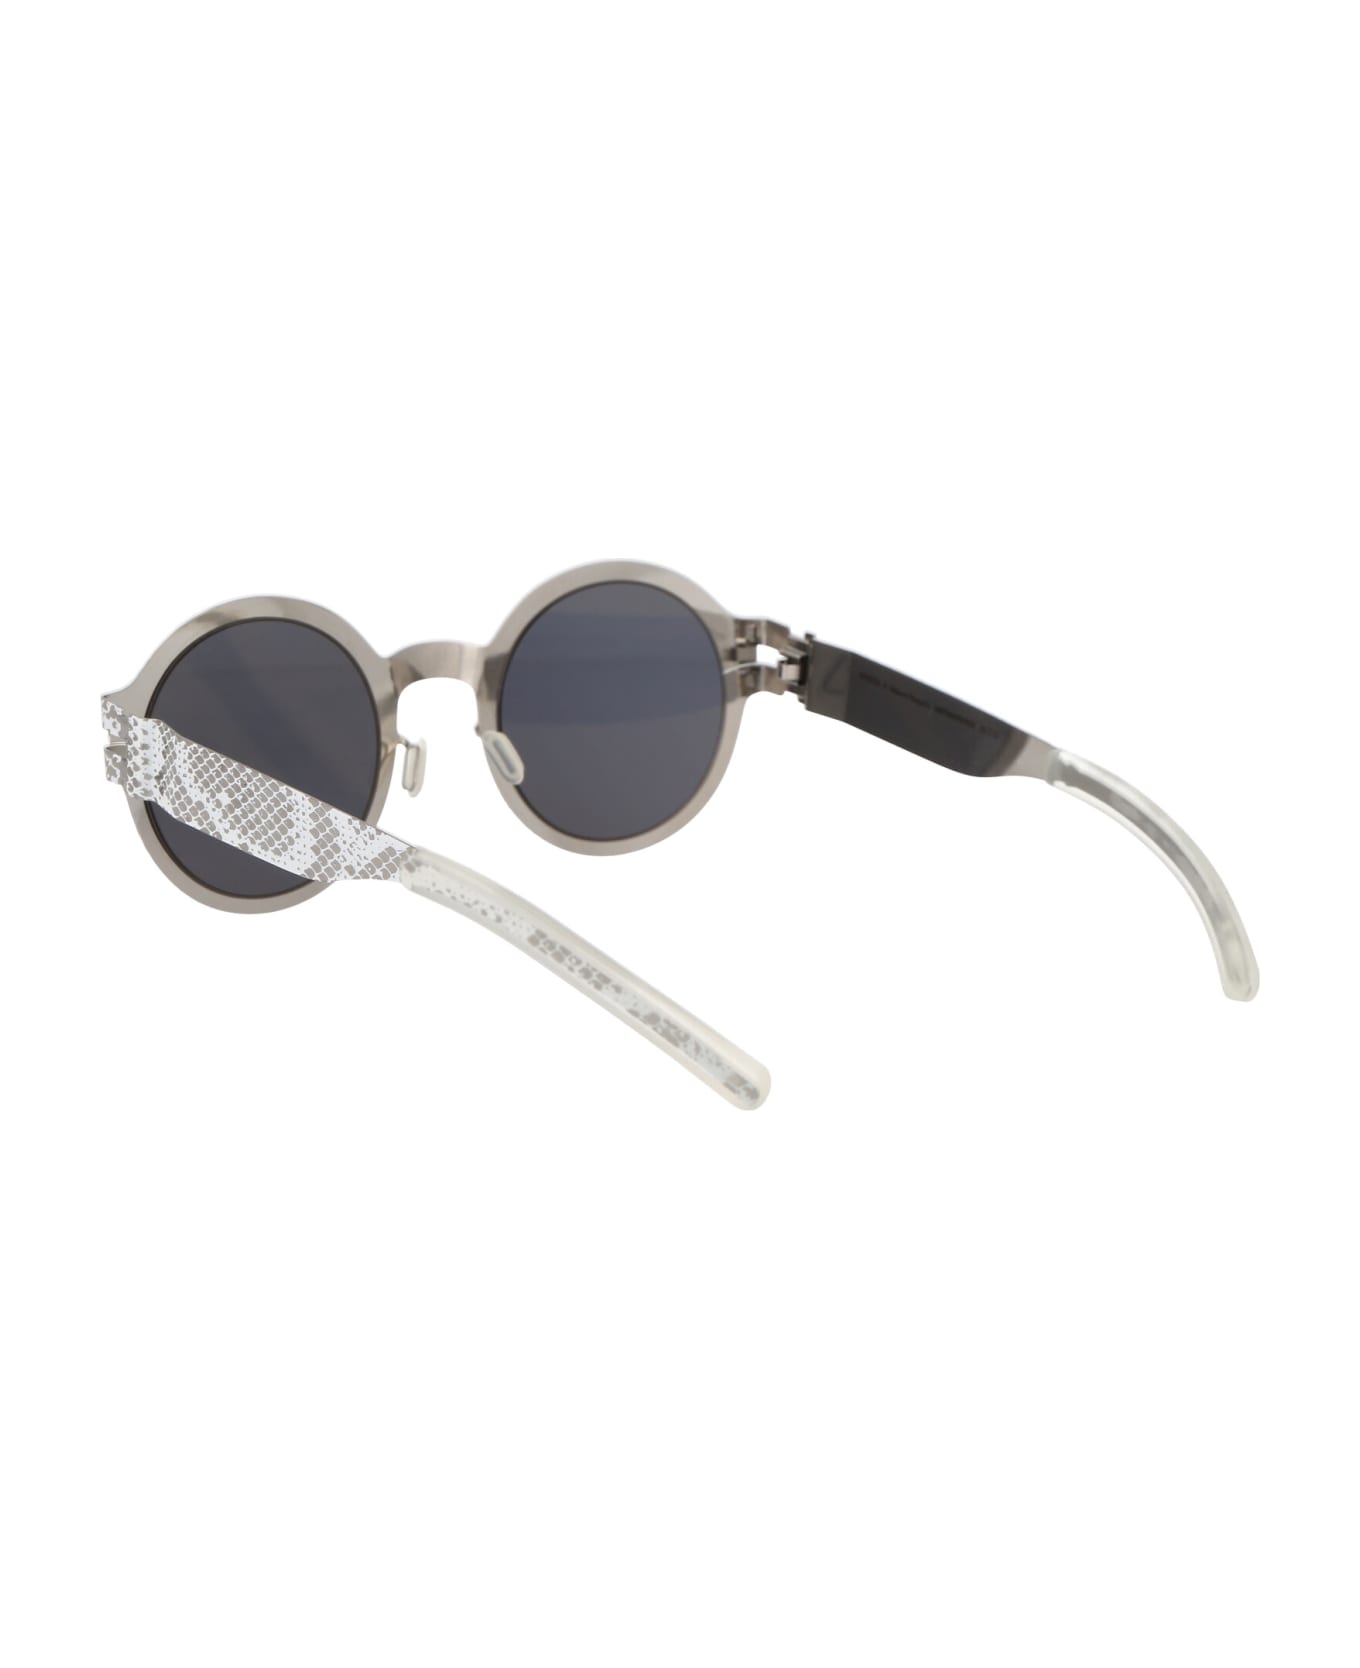 Mykita Mmtransfer003 Sunglasses - 241 Silver White Python Dark Grey Solid